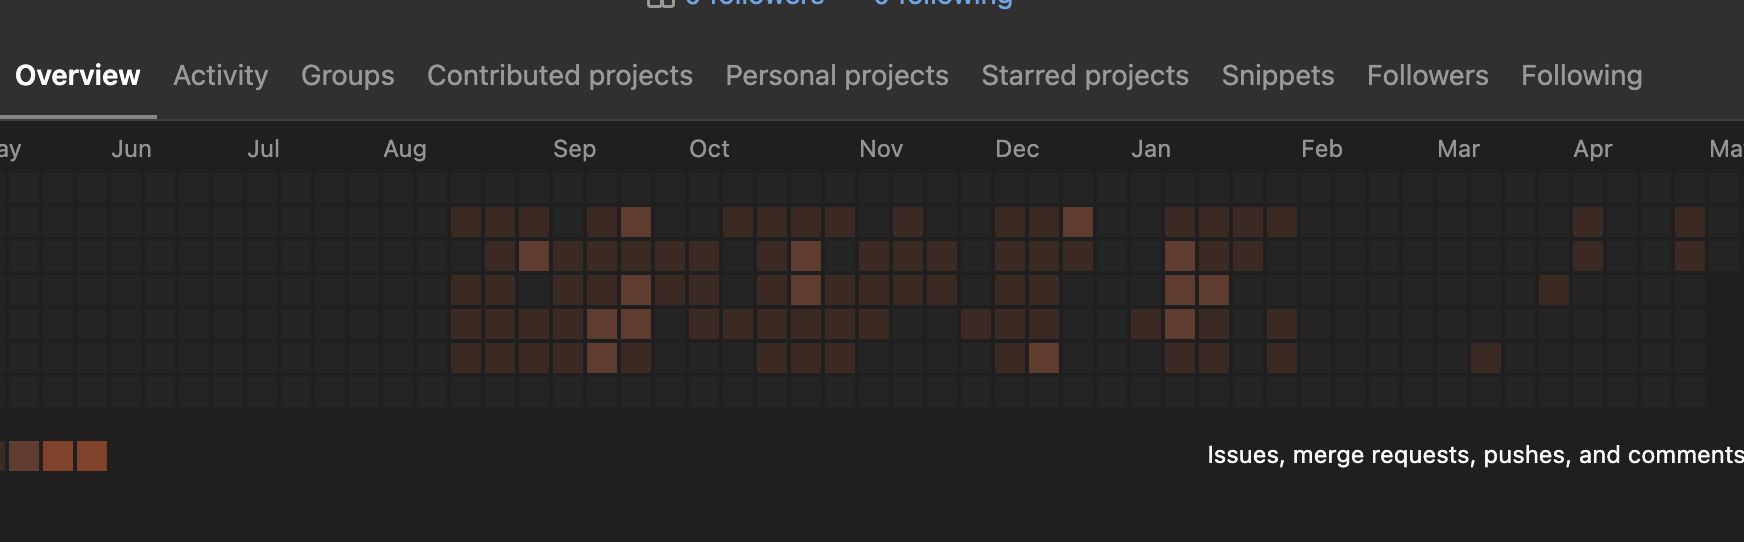 Screenshot of GitLab profile activity calendar colors